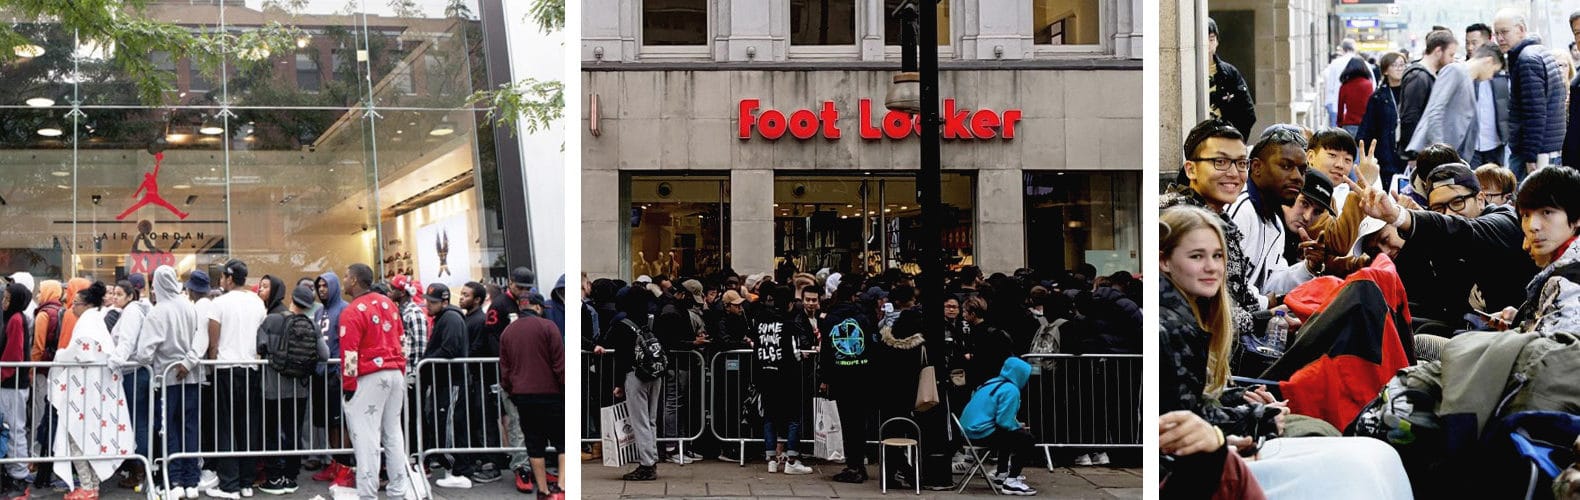 crowd outside foot locker - brand identity vs. logo design